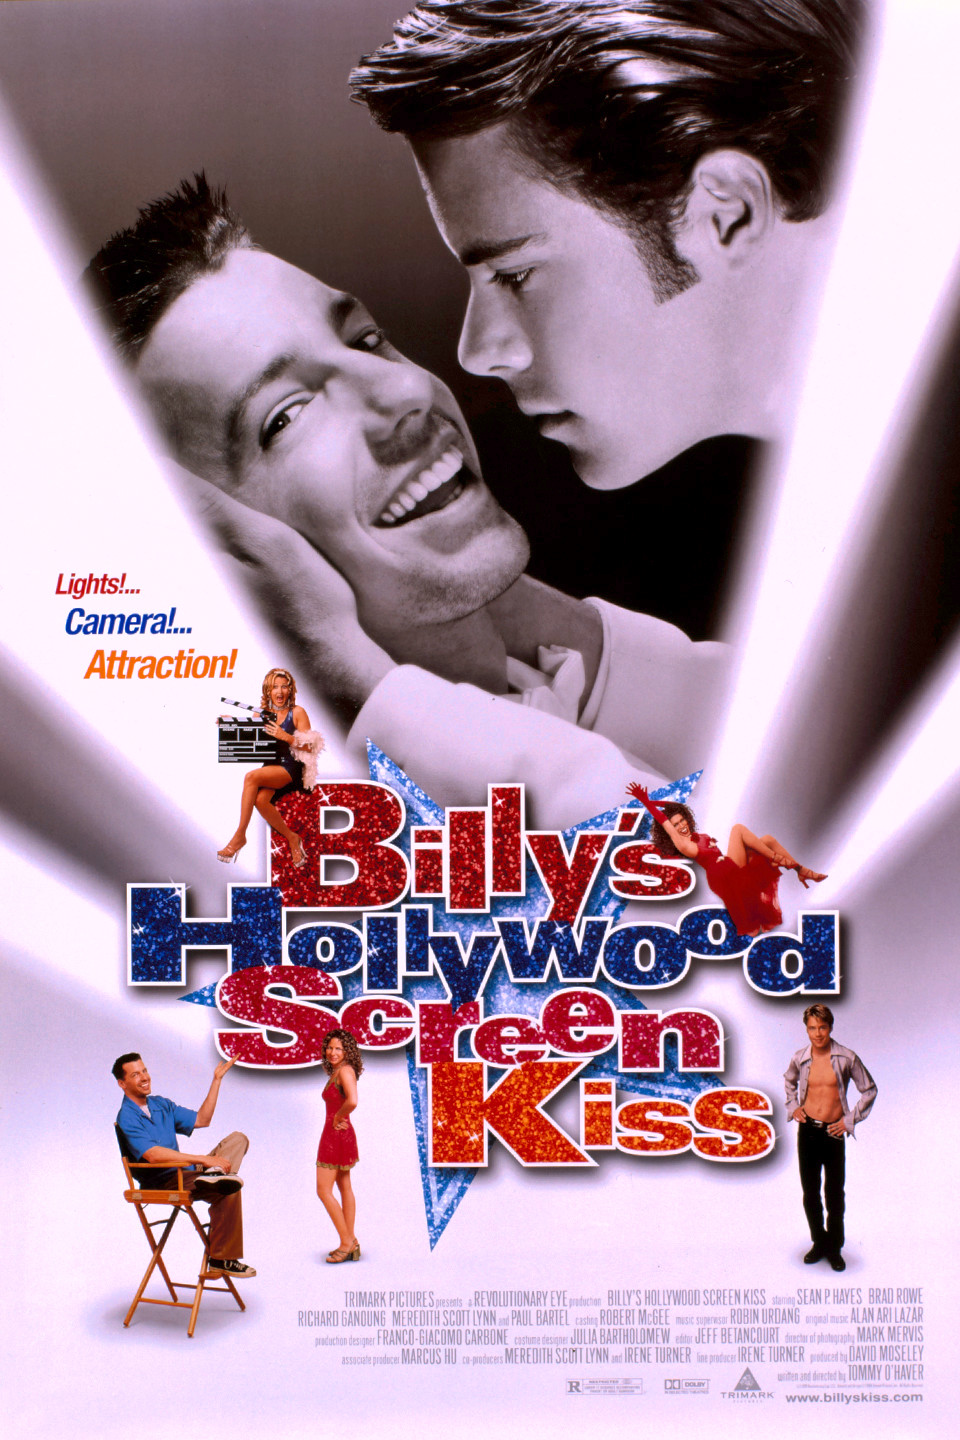 Billysh Hollywood Screen Kiss